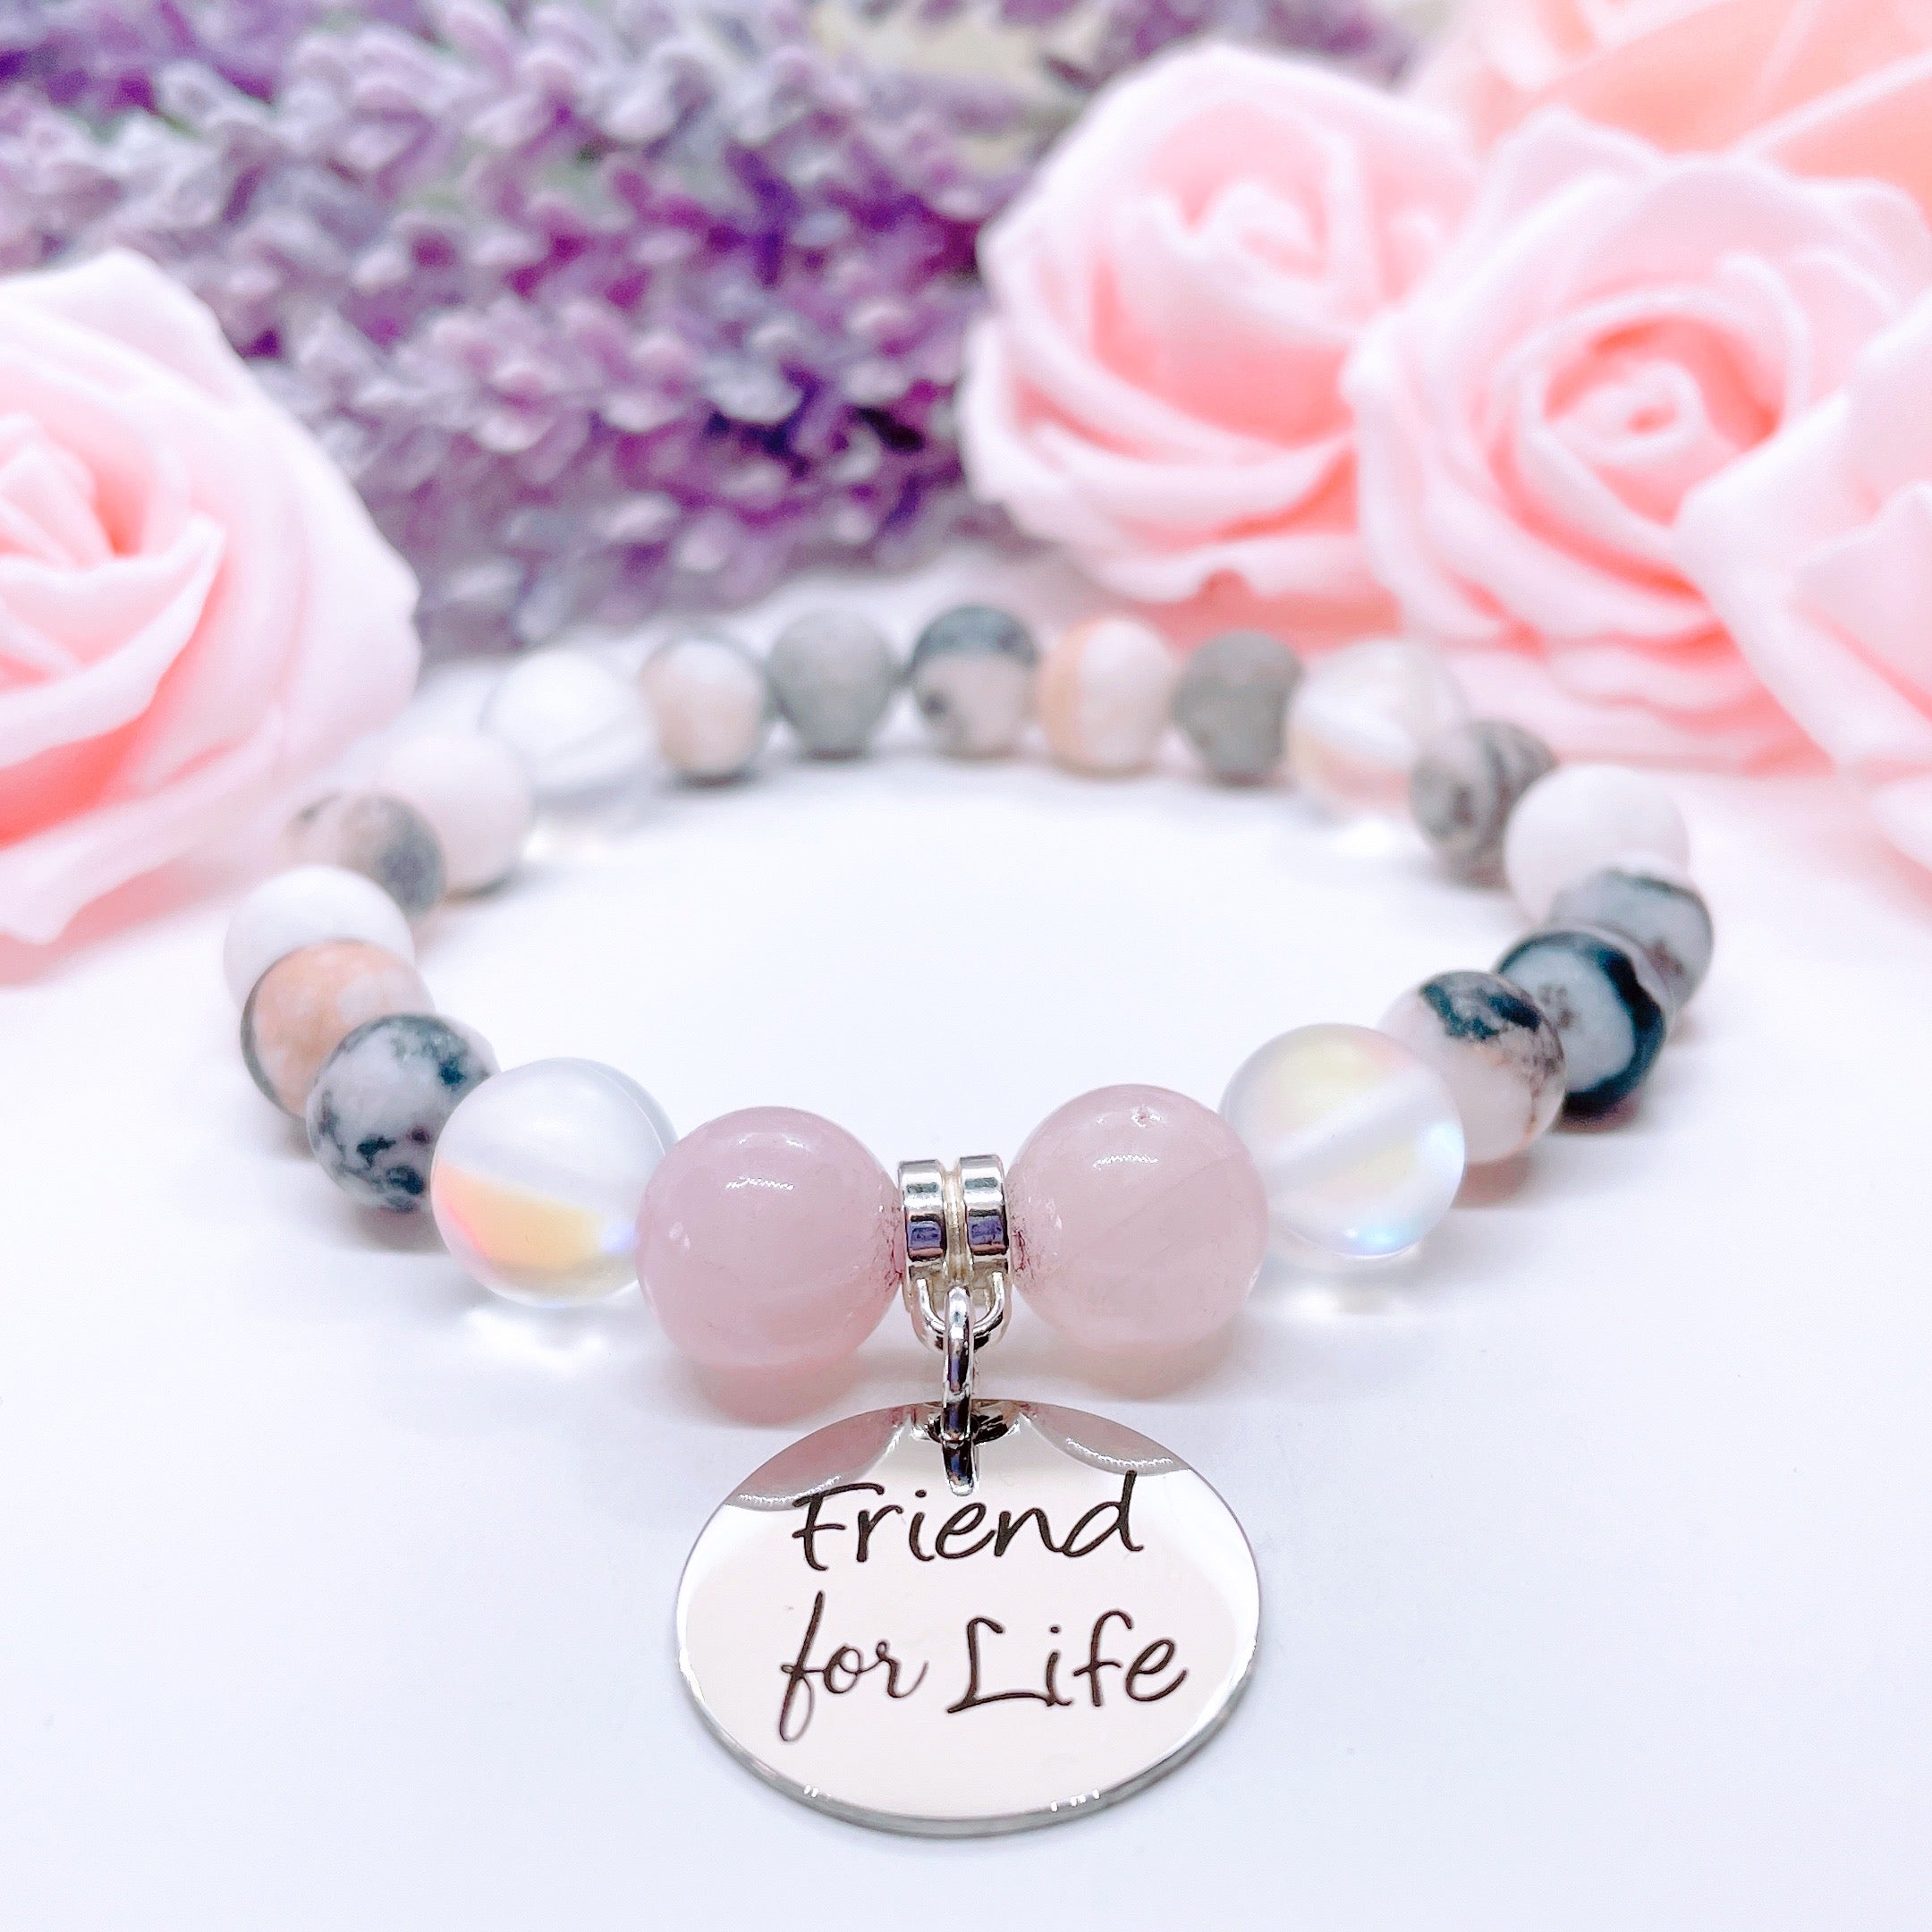 Friend for Life Charm Bracelet Rose Quartz